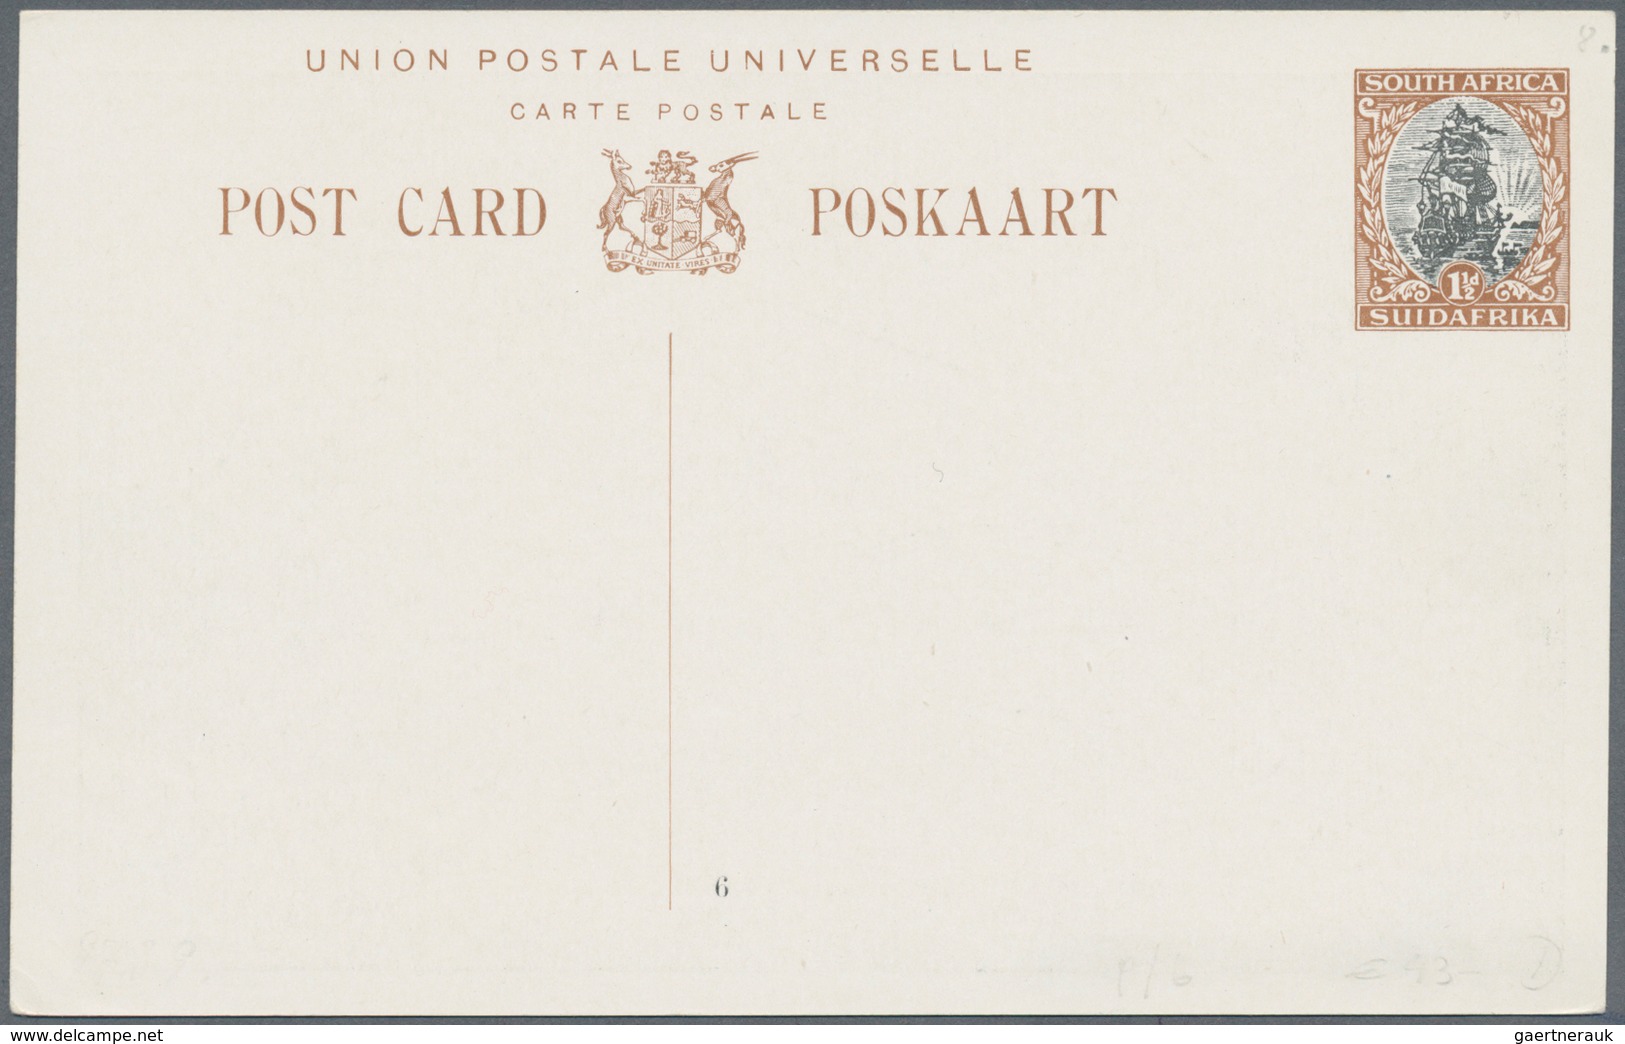 Südafrika - Ganzsachen: 1927, six pictorial stat. postcards ship-type 1½d. brown/black with differen